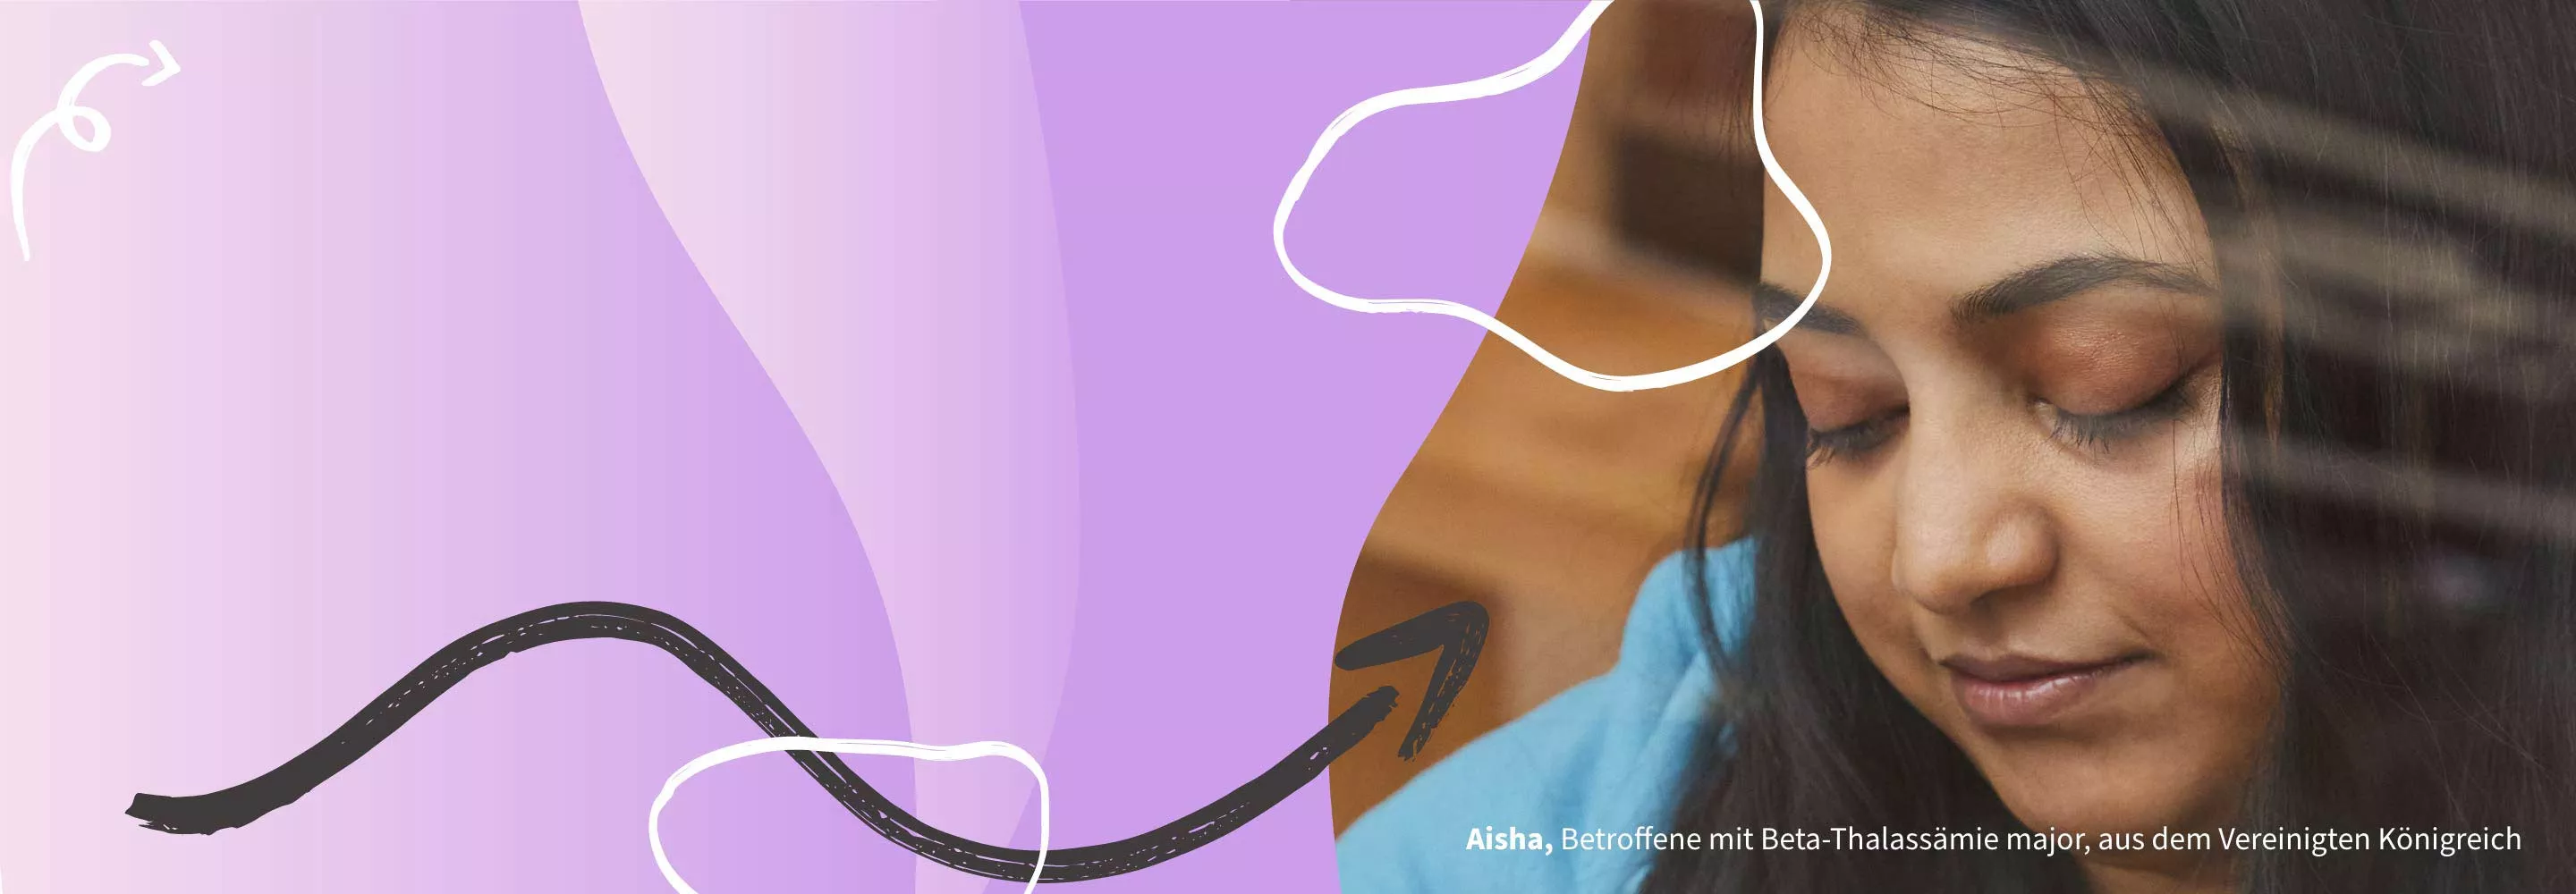 Aisha, Betroffene mit Beta-Thalassämie major, blickt nach unten